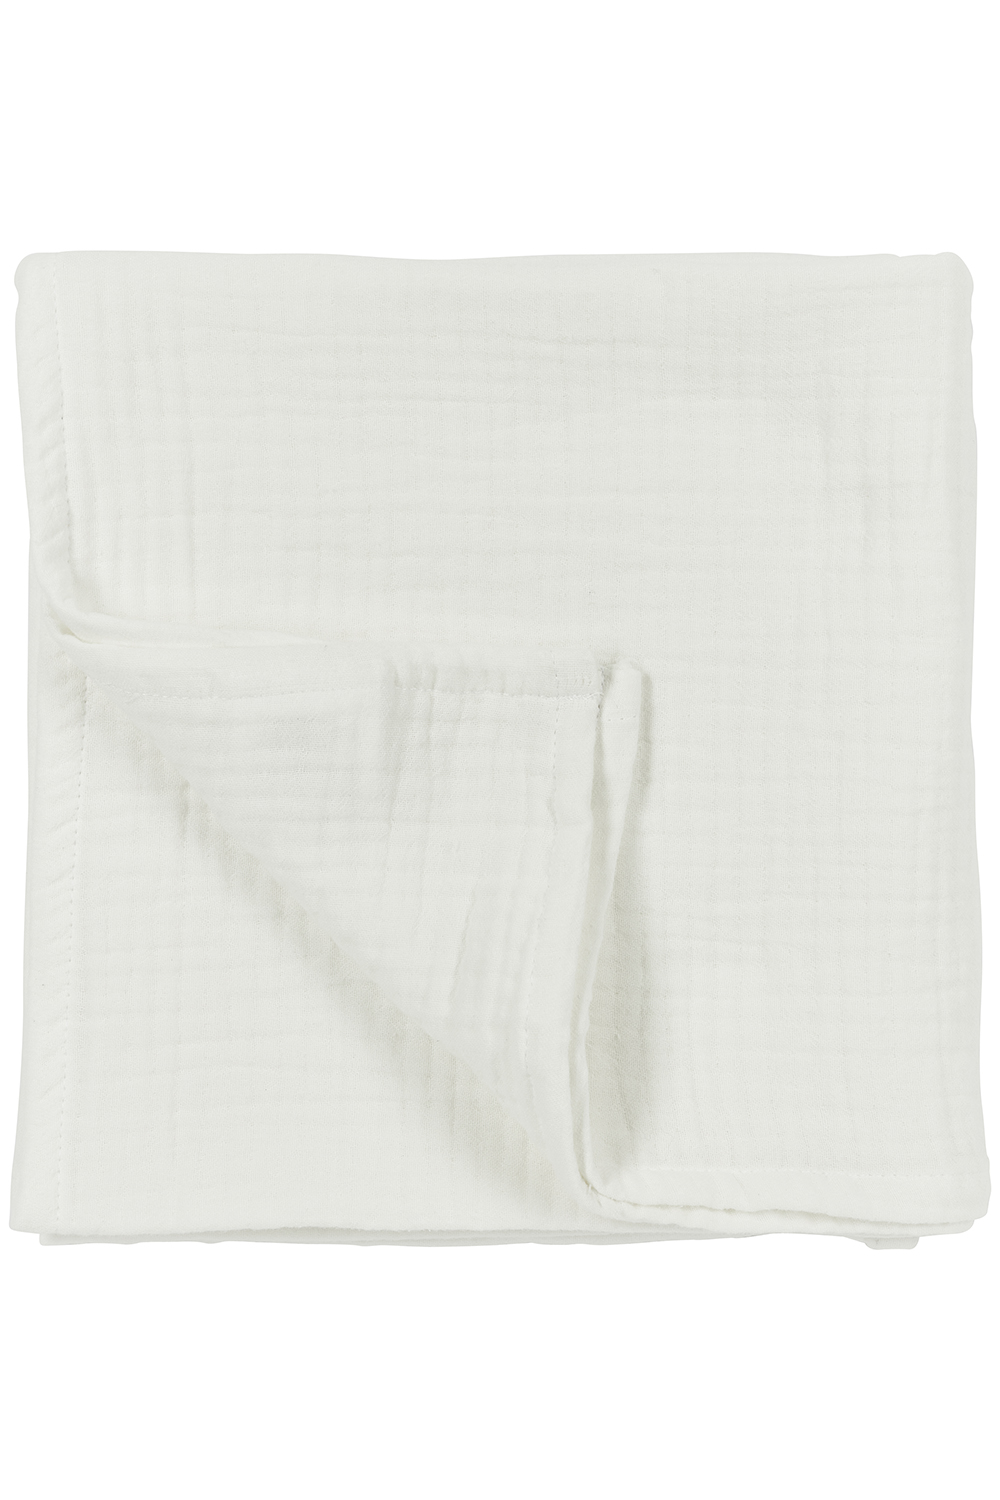 Blanket muslin Uni - offwhite - 140x200cm